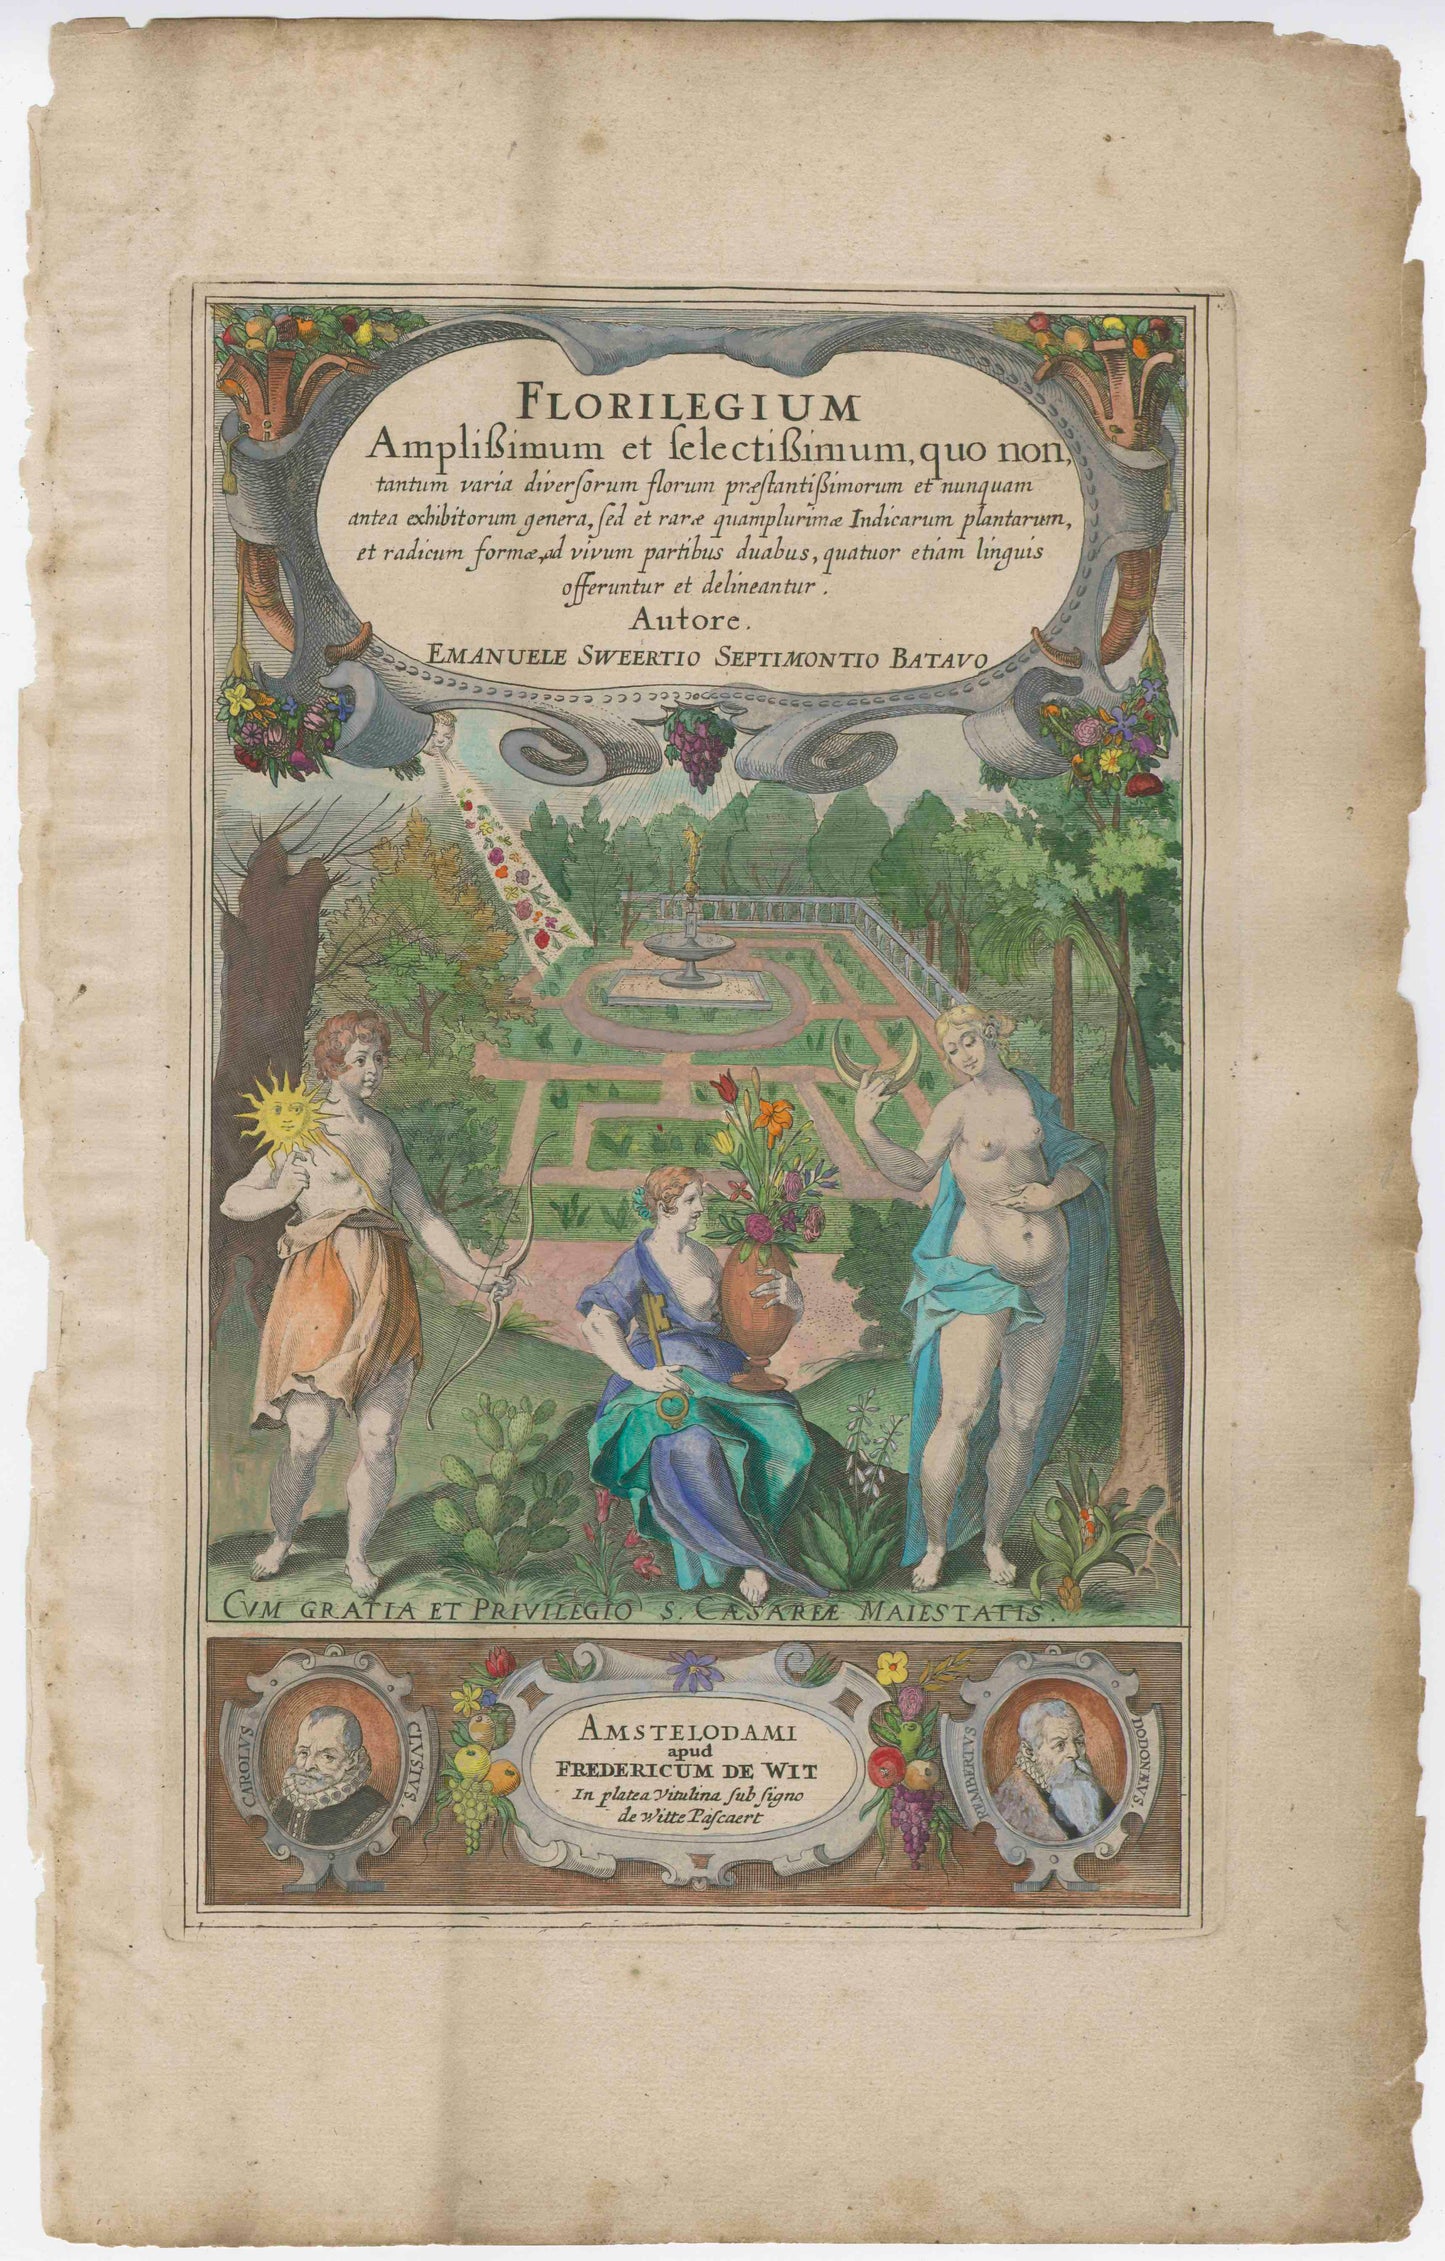 Emanuele Sweerts 17th Century "Florilegium" Print - Plate 26